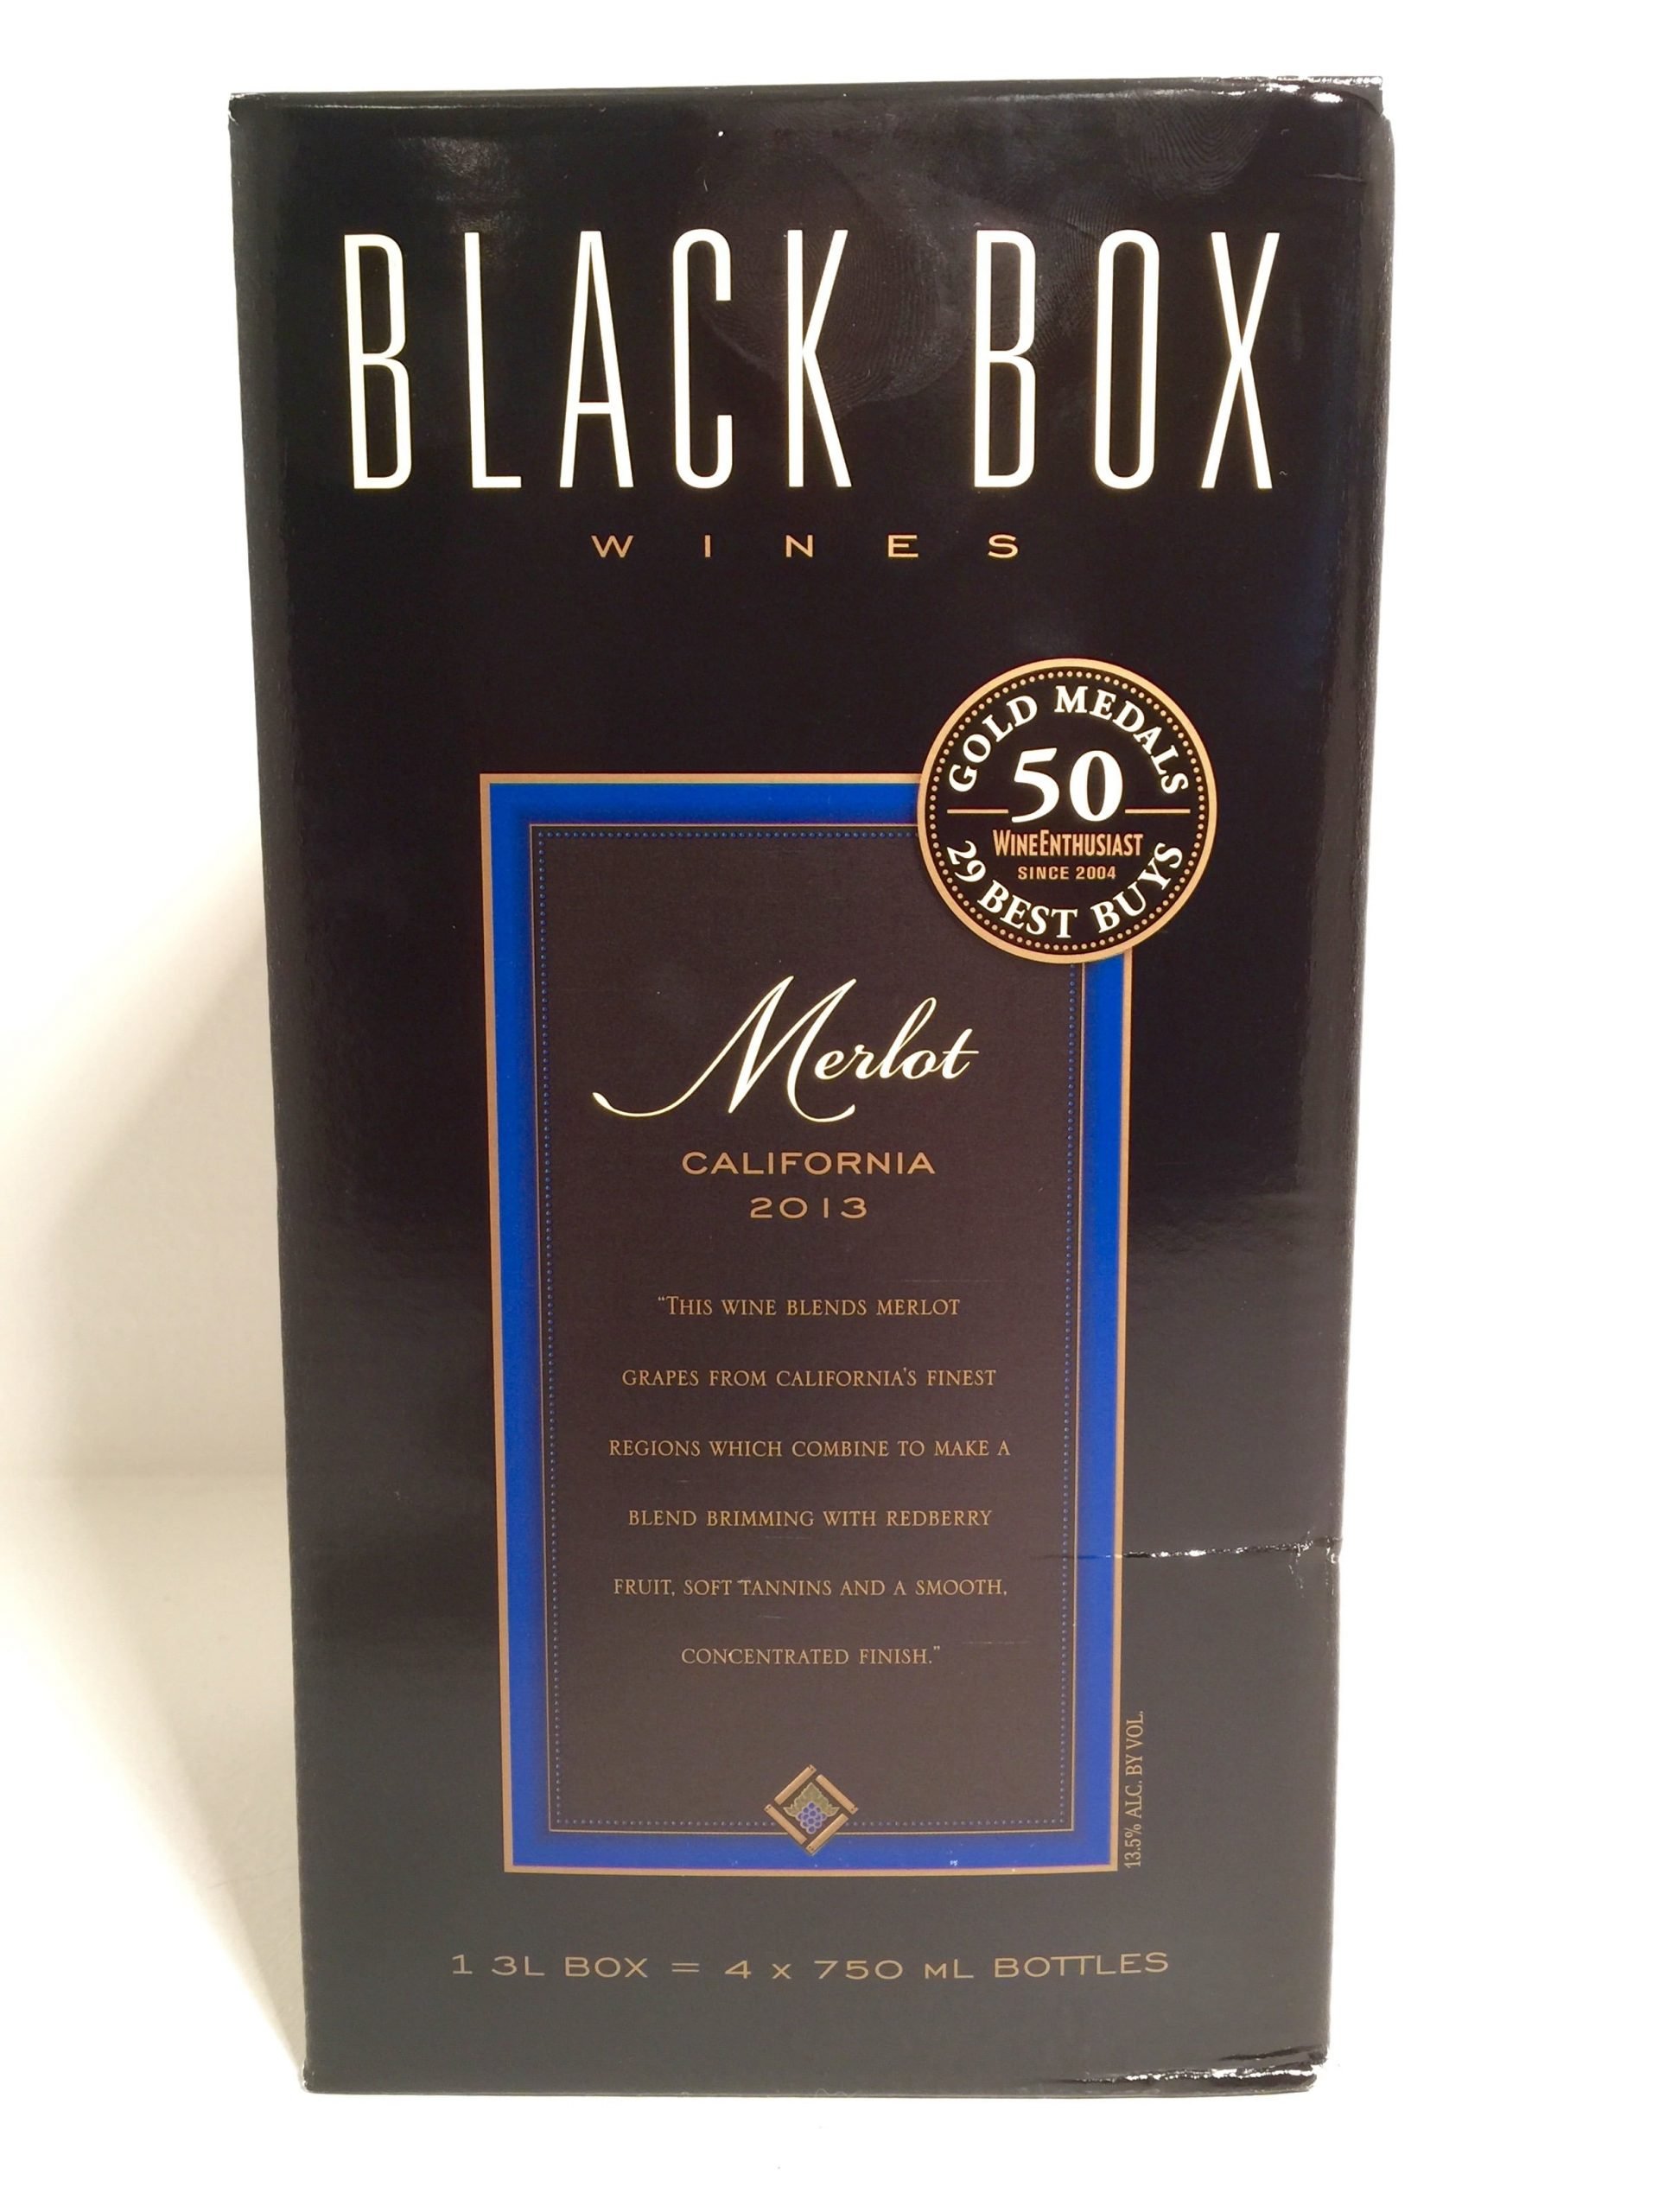 Black Box Wine Review